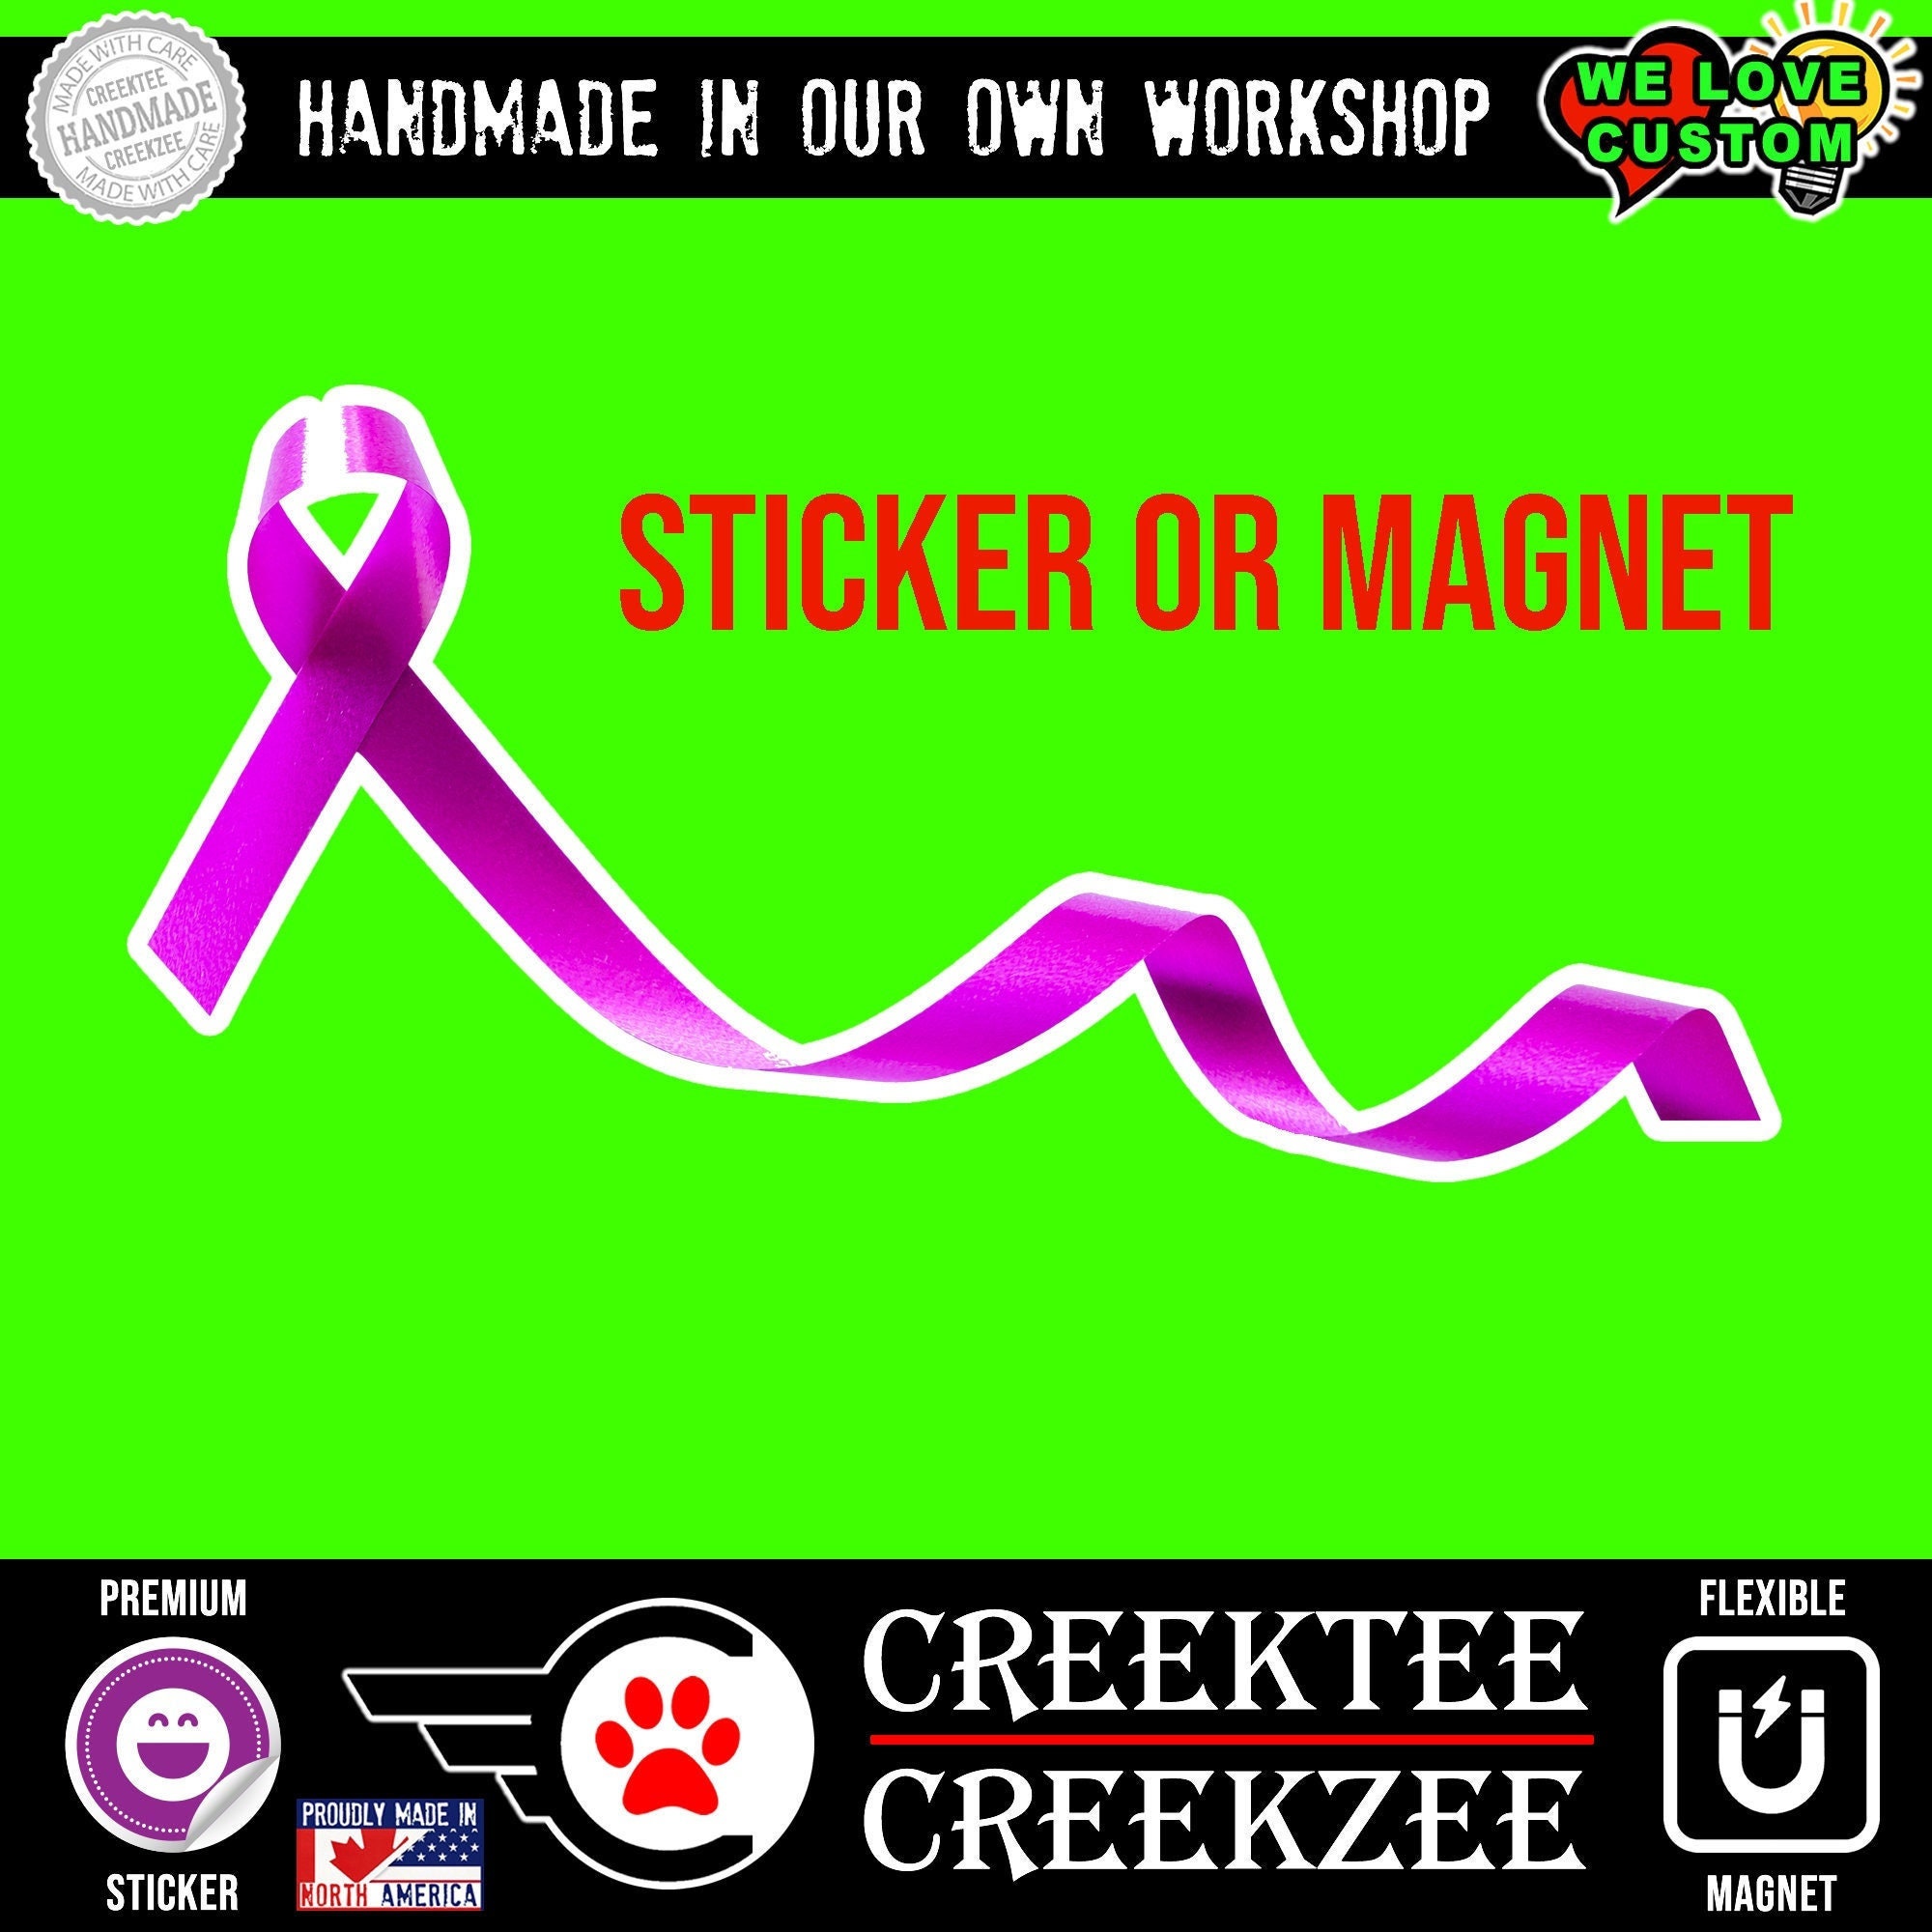 Cancer Awareness Ribbon Sticker or Magnet, Vinyl Sticker, Laminate, UV Laminate and Magnet options!